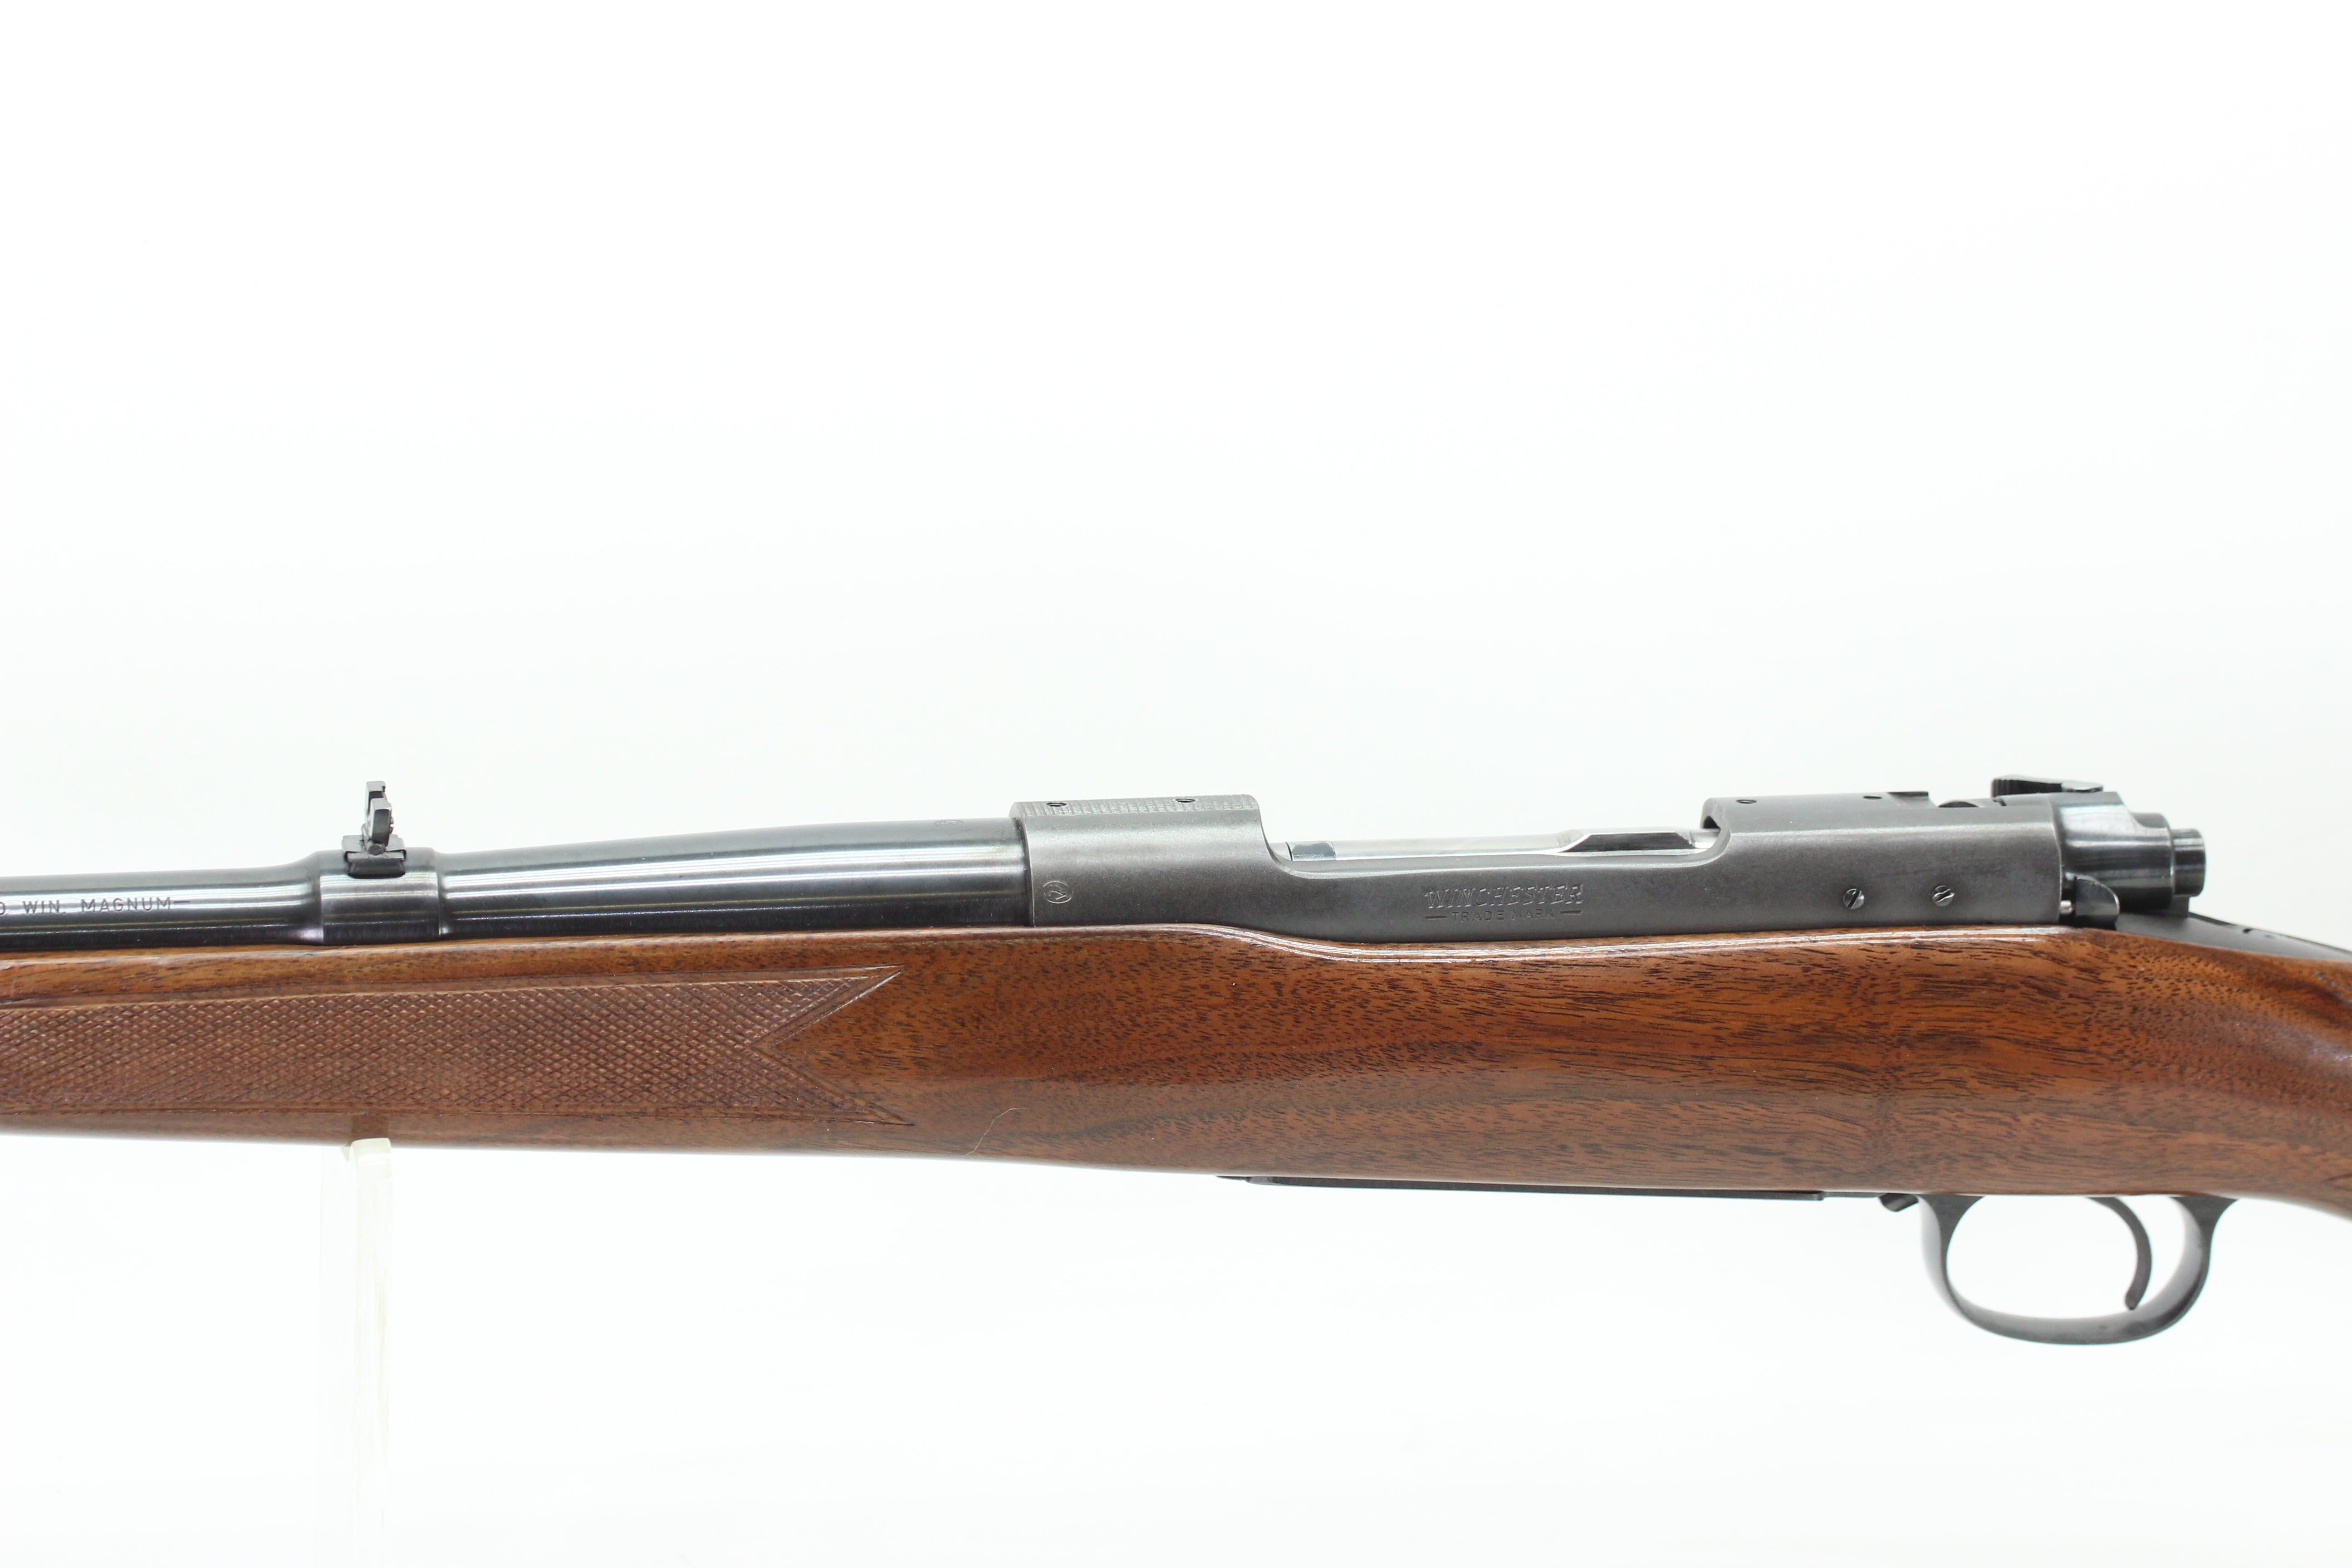 .300 Winchester Magnum "Alaskan" Rifle - 1962/1963